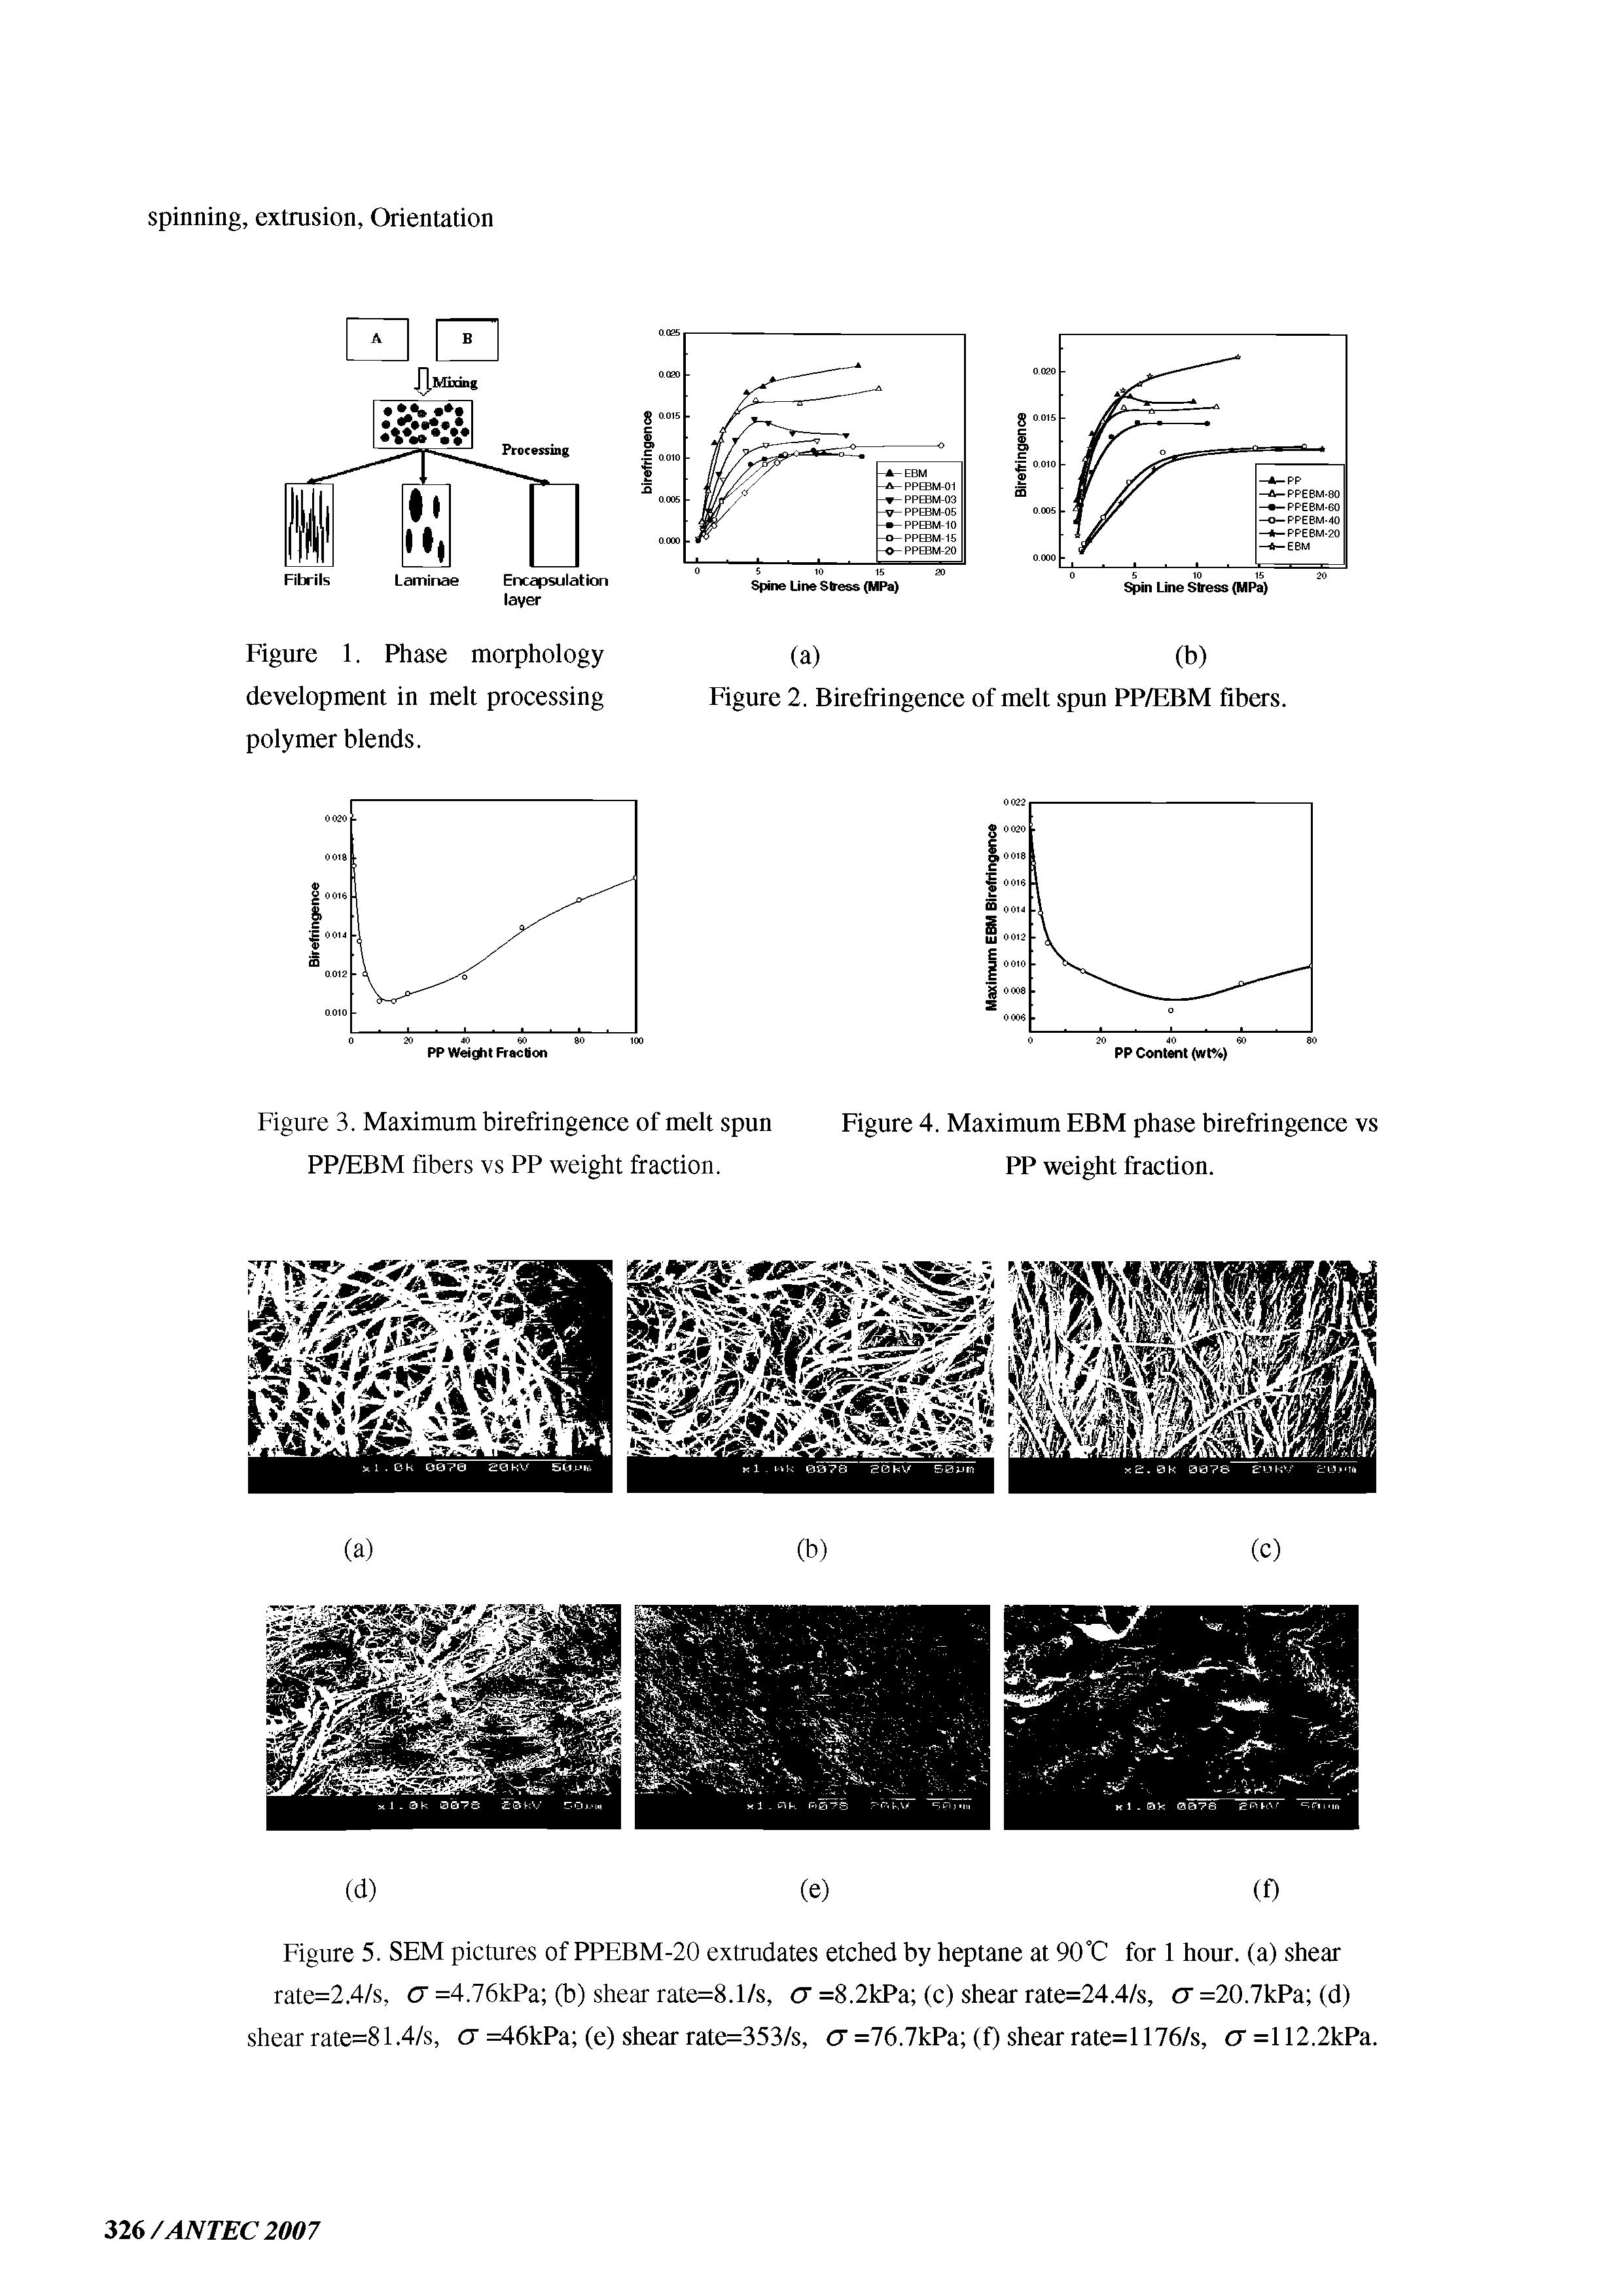 Figure 1. Phase morphology development in melt processing polymer blends.